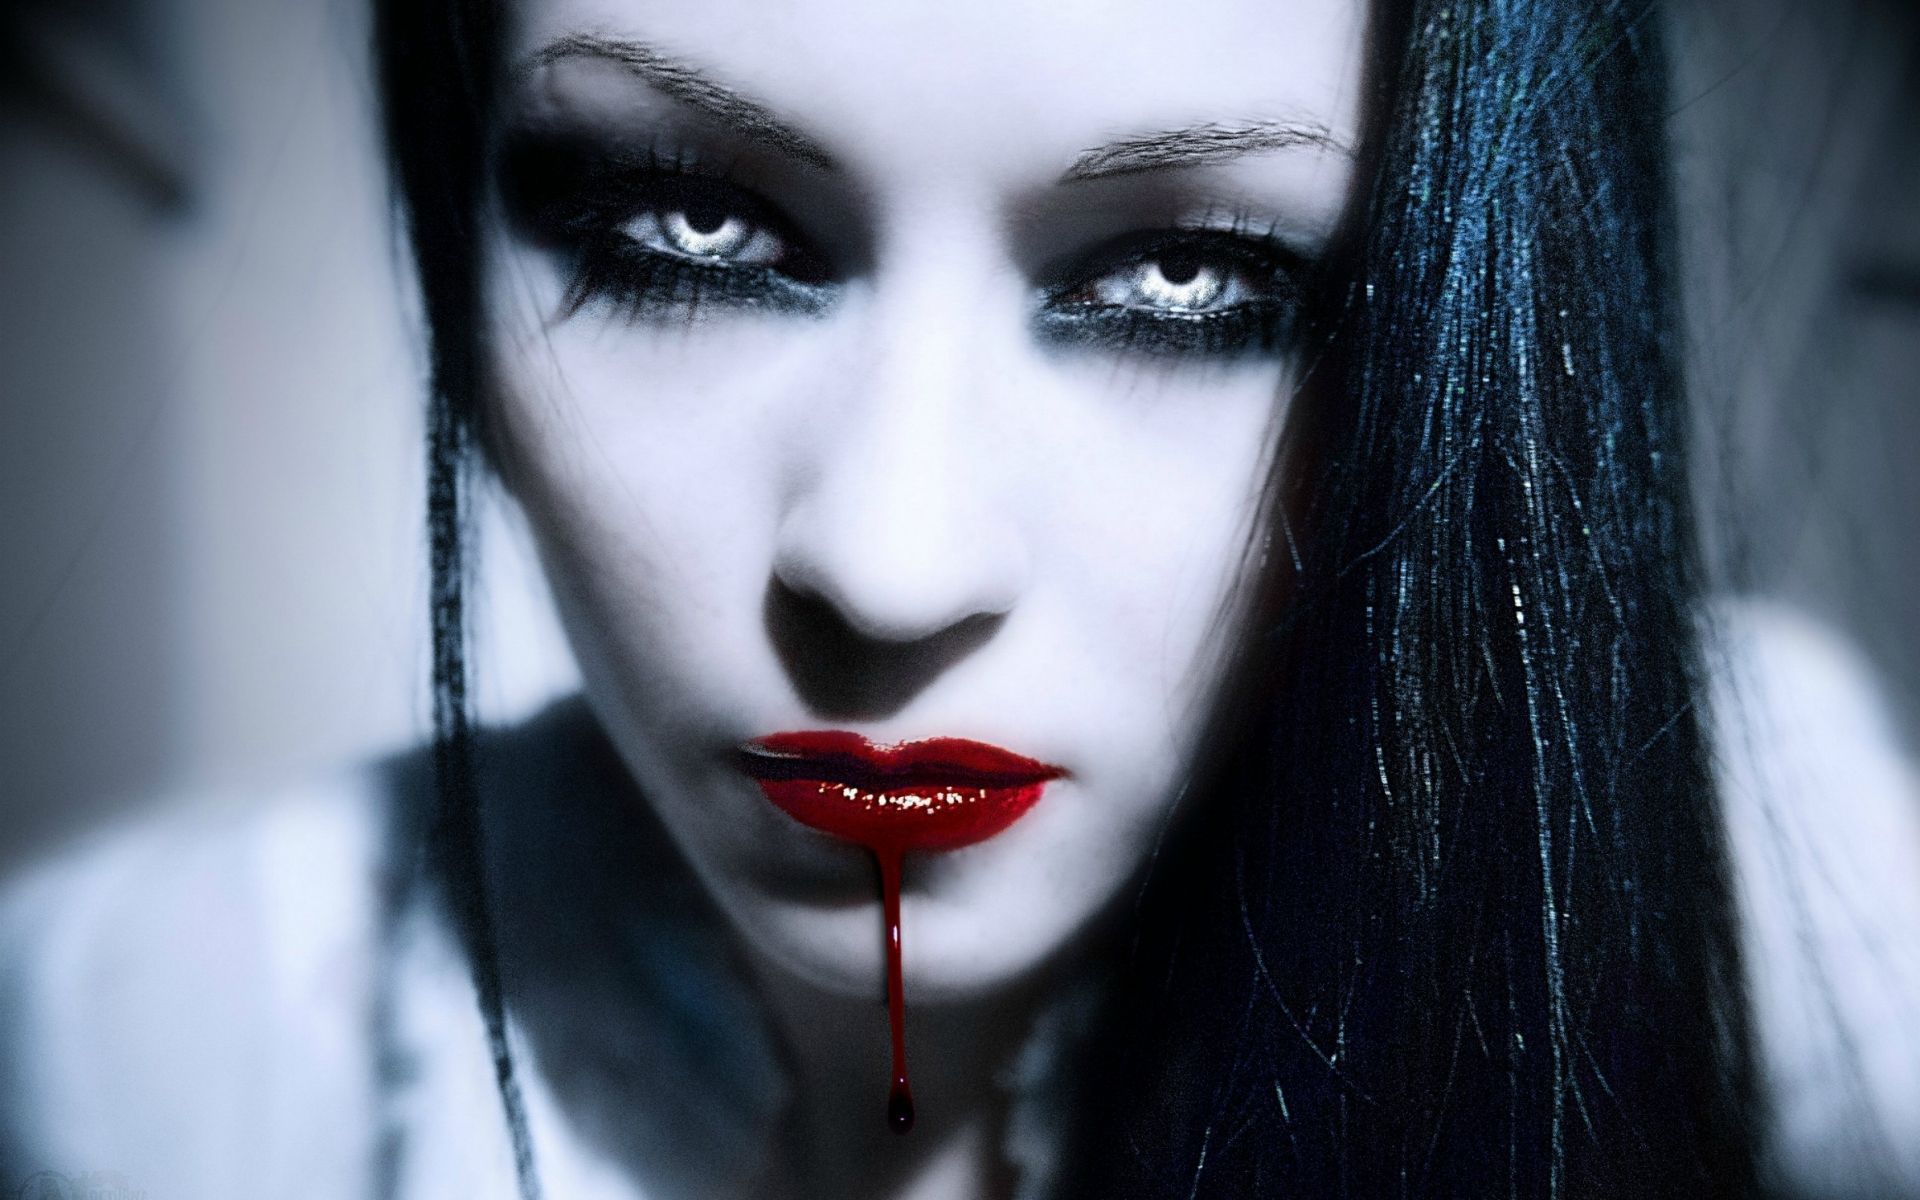 Scary Gothic Wallpaper. dark horror fantasy gothic vampire women